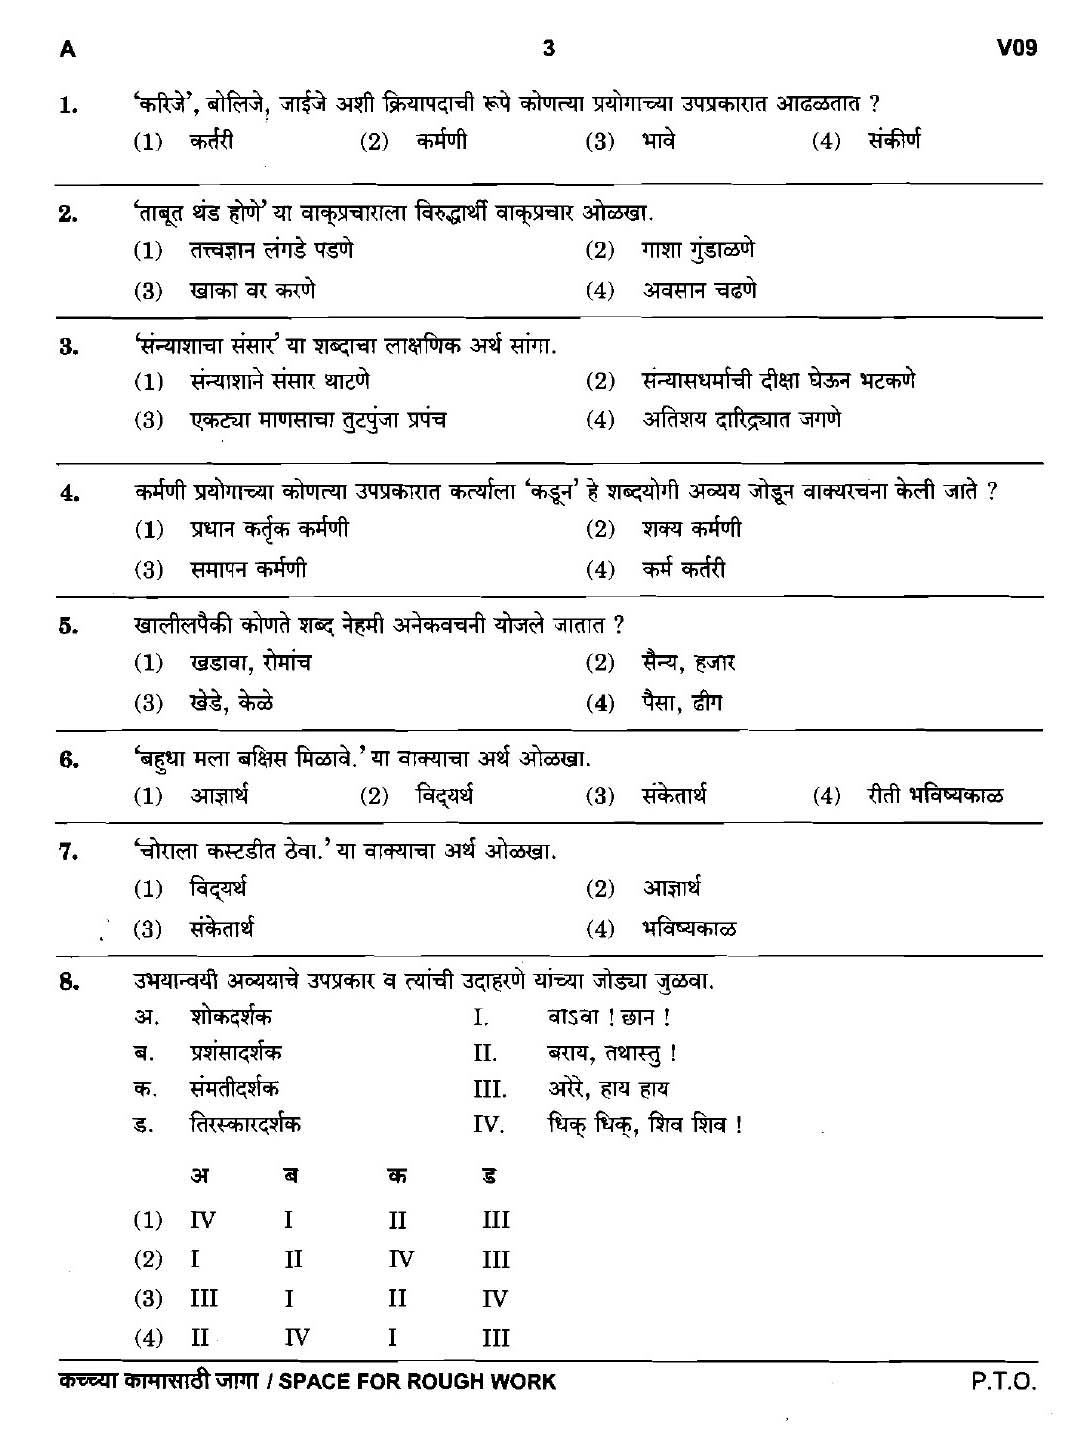 Maharashtra PSC Clerk Typist Main Exam Question Paper 2017 2